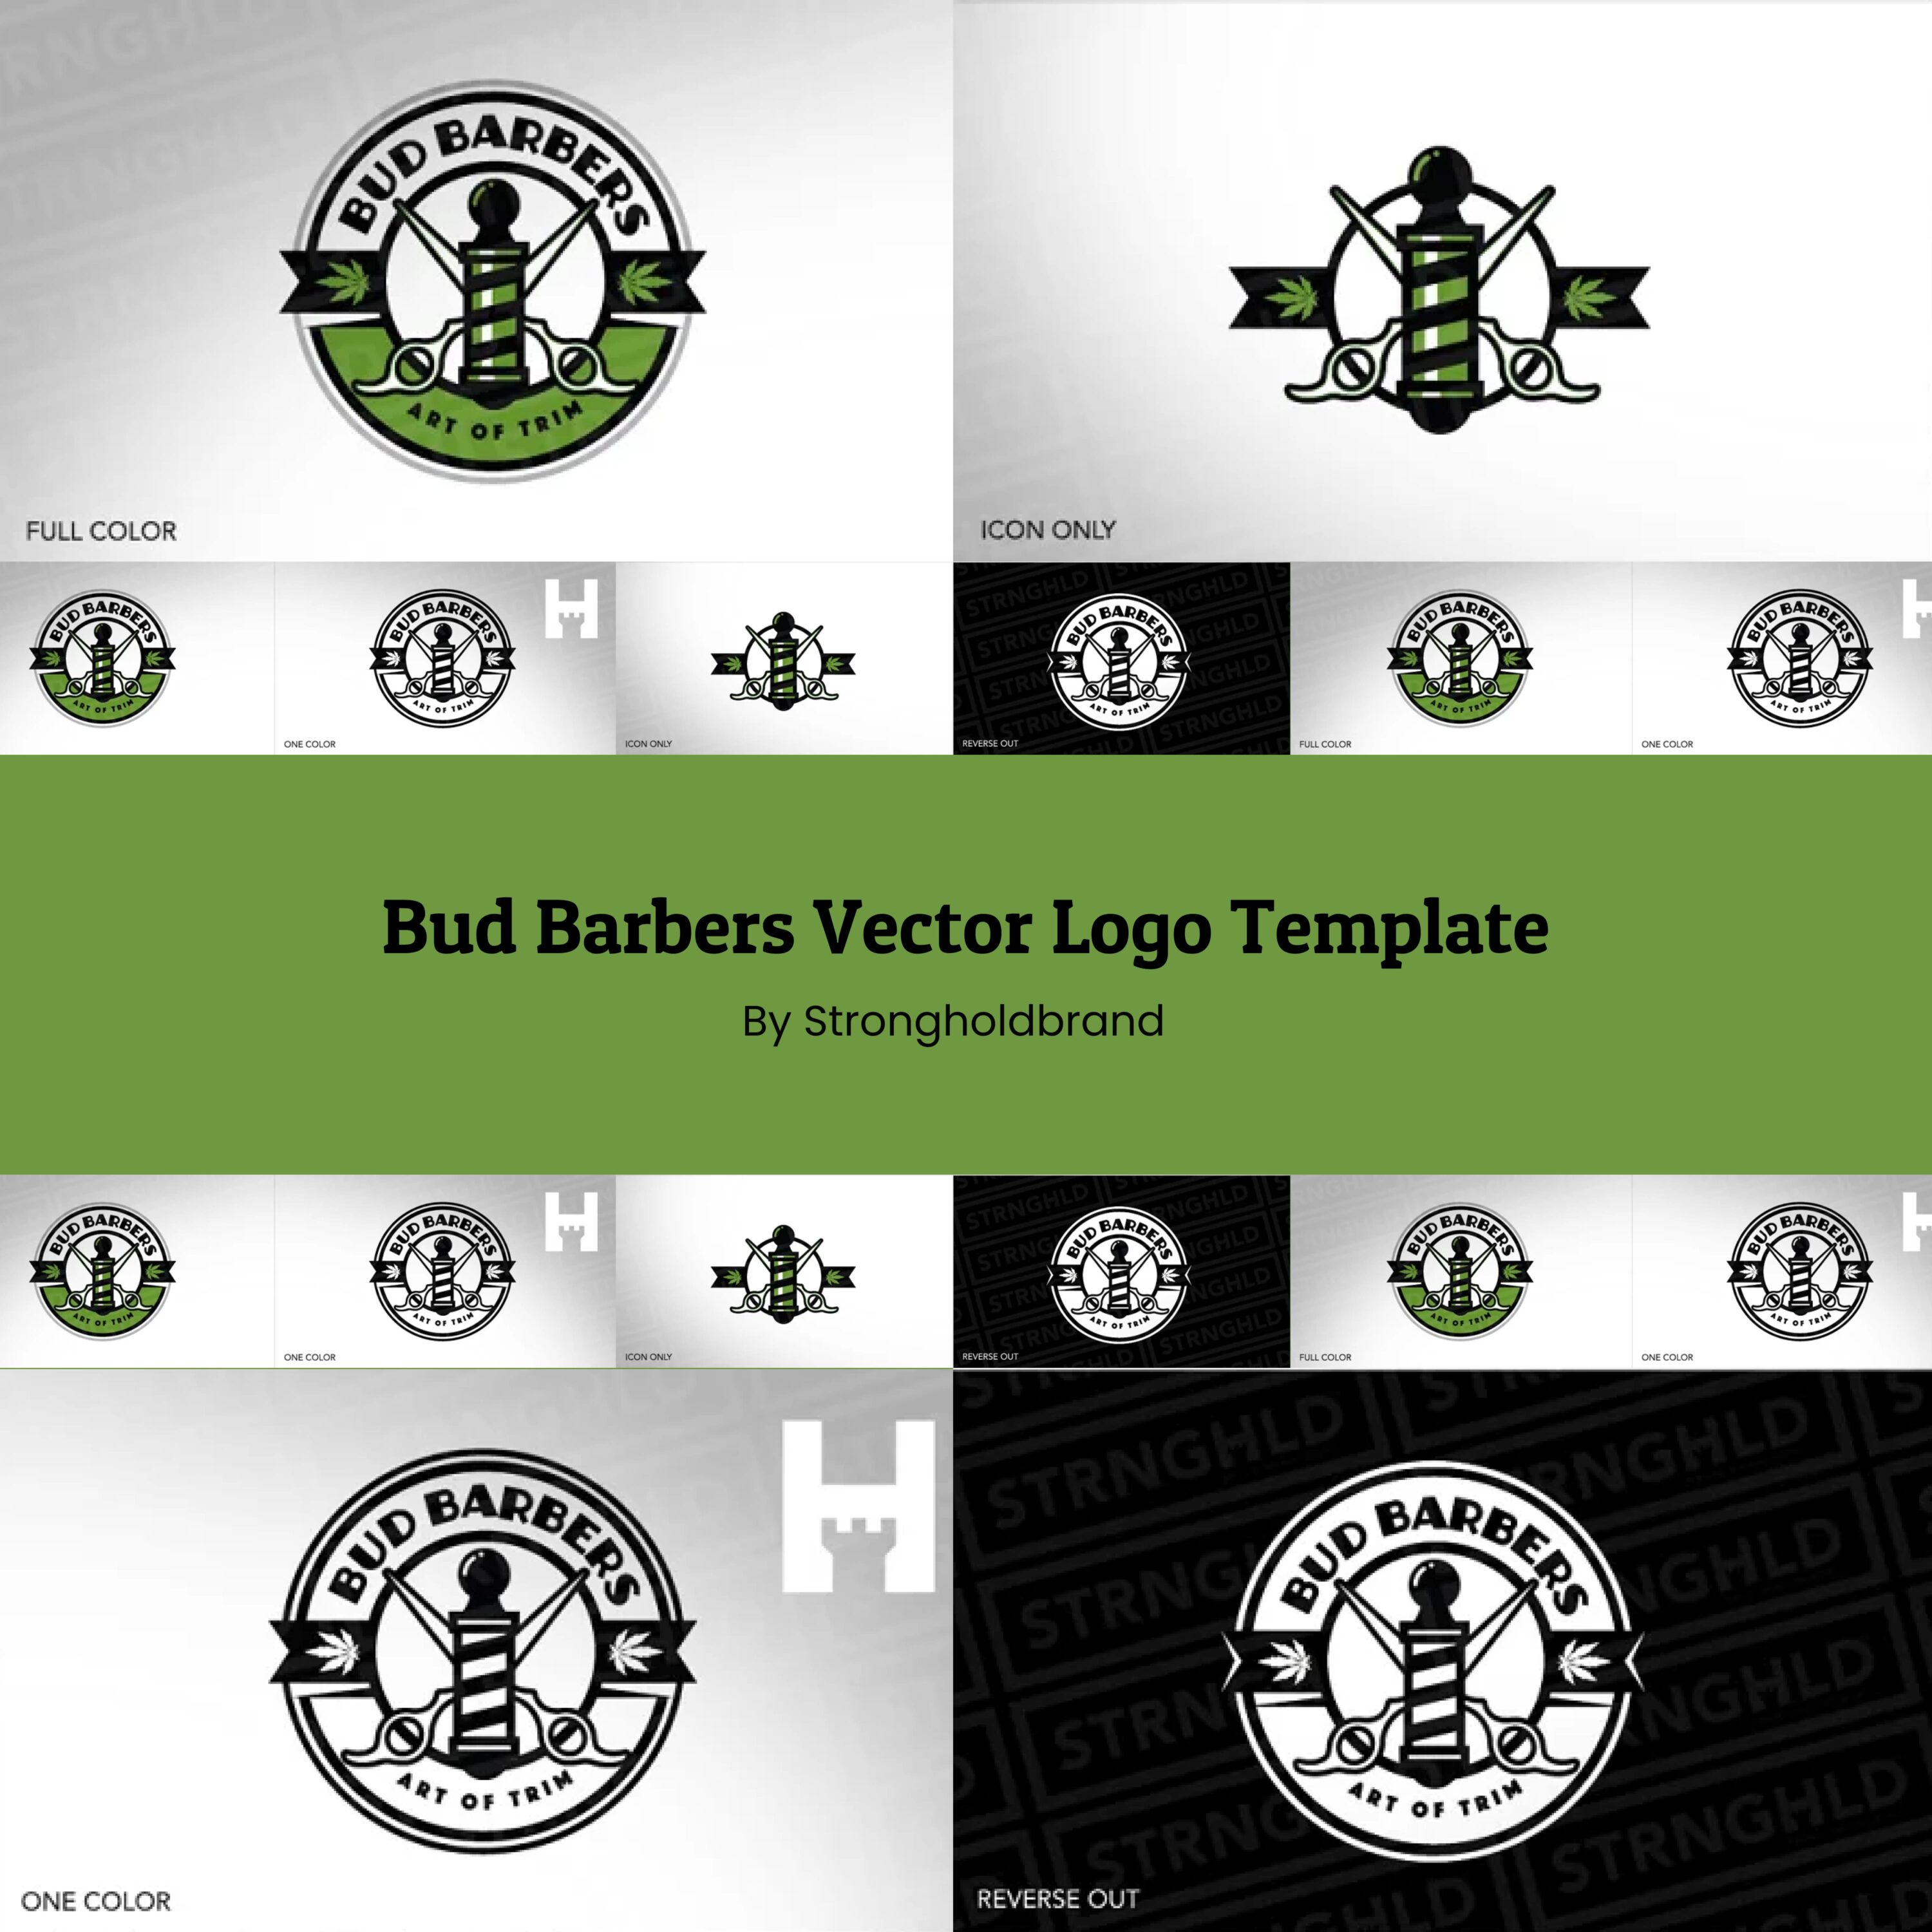 Bud Barbers Vector Logo Template.